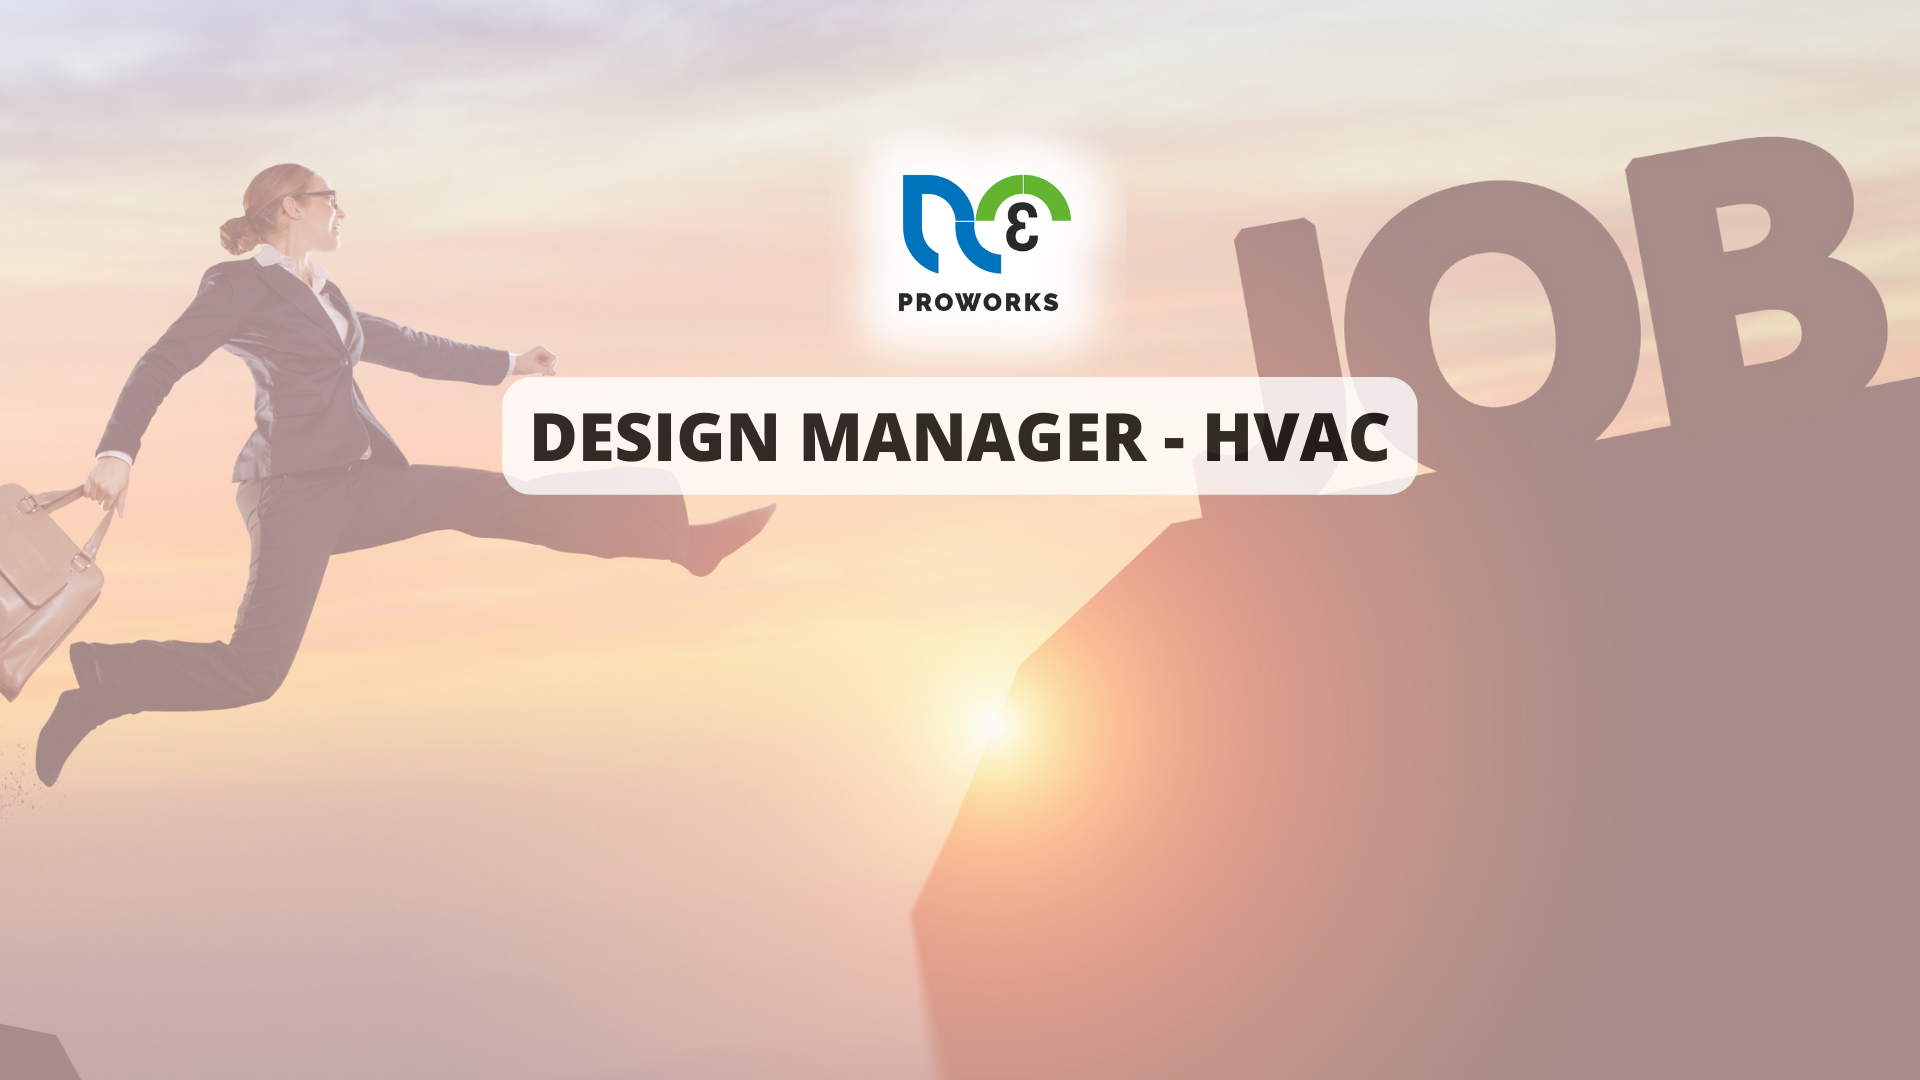 Design Manager - HVAC